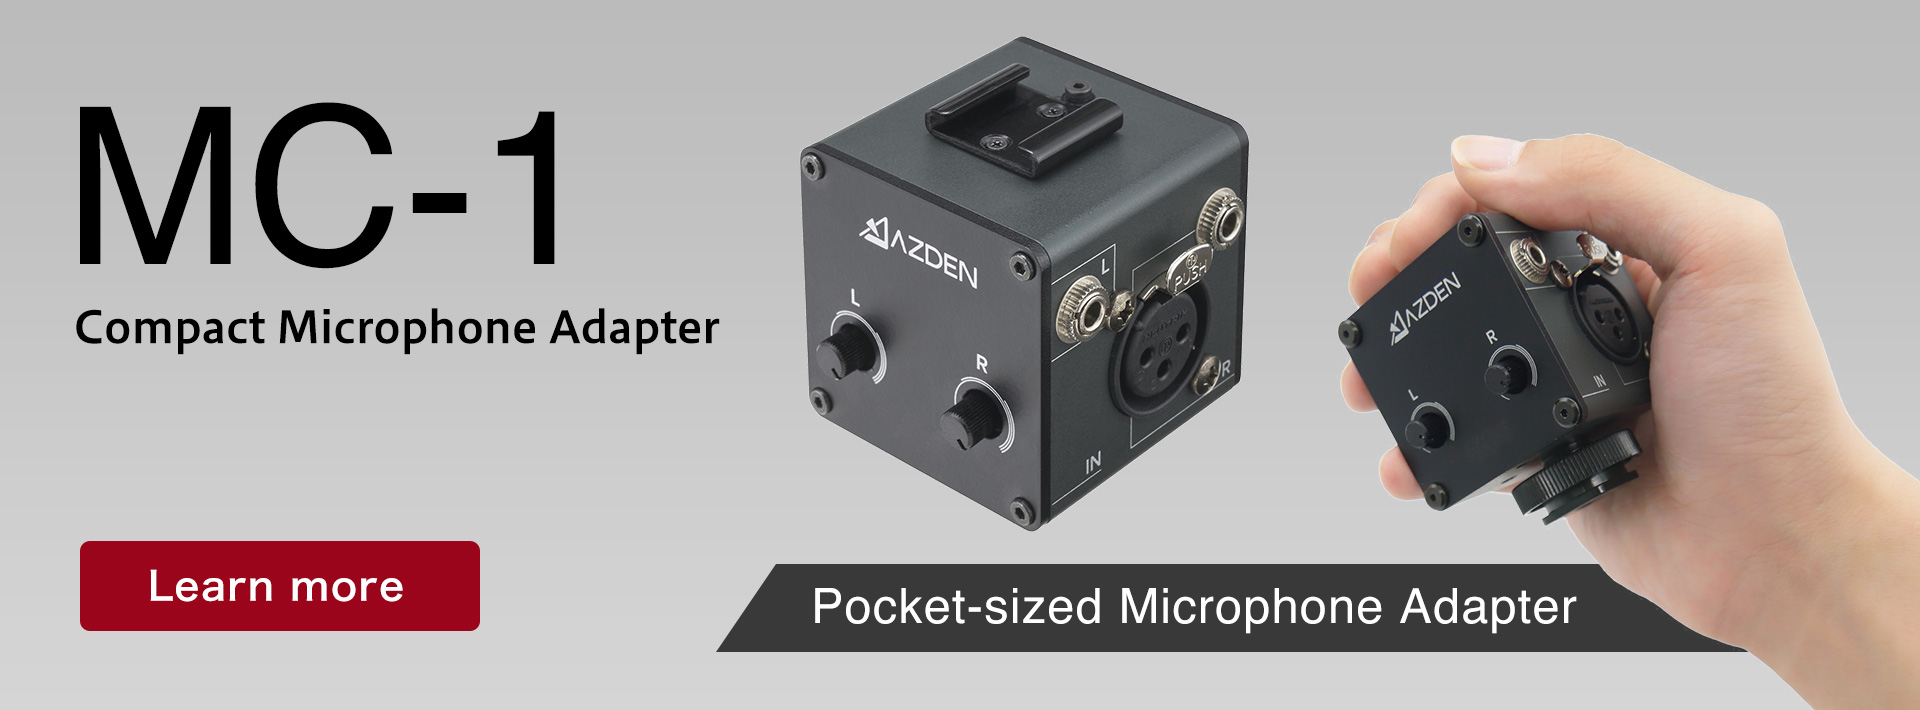 MC-1/Compact Microphone Adapter